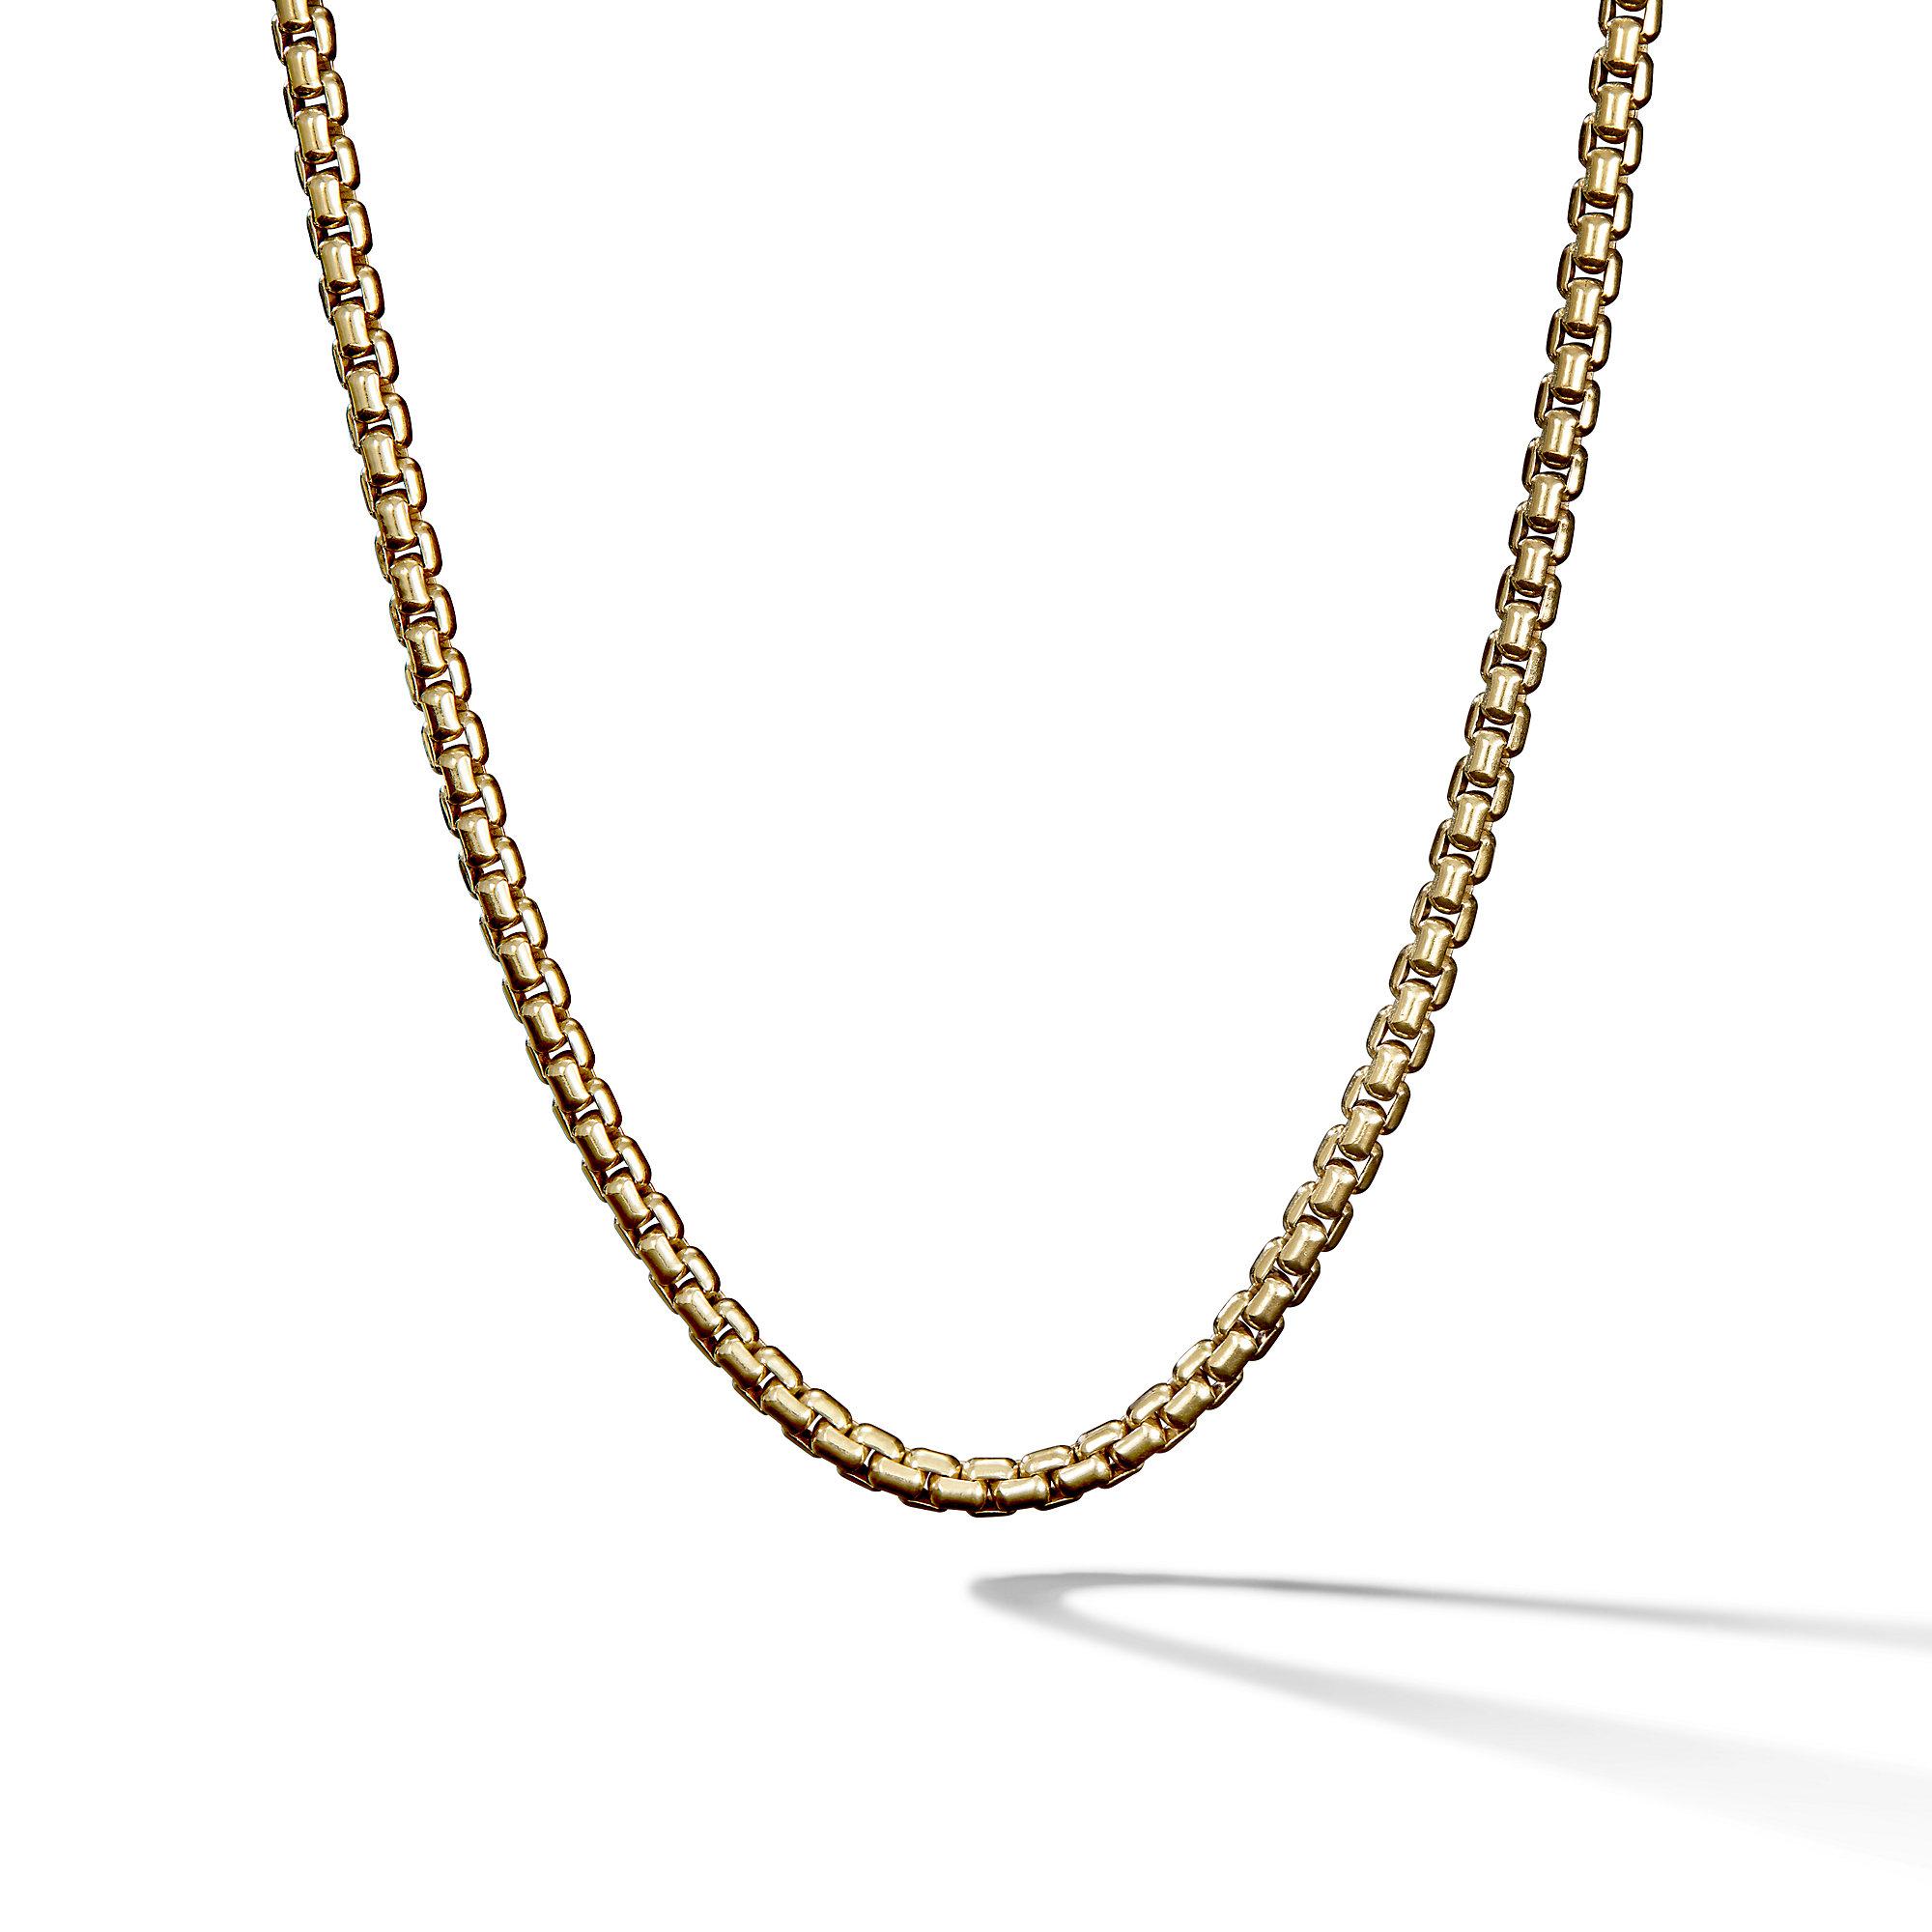 David Yurman Medium Box Chain Necklace in 18K Gold, 3.4mm